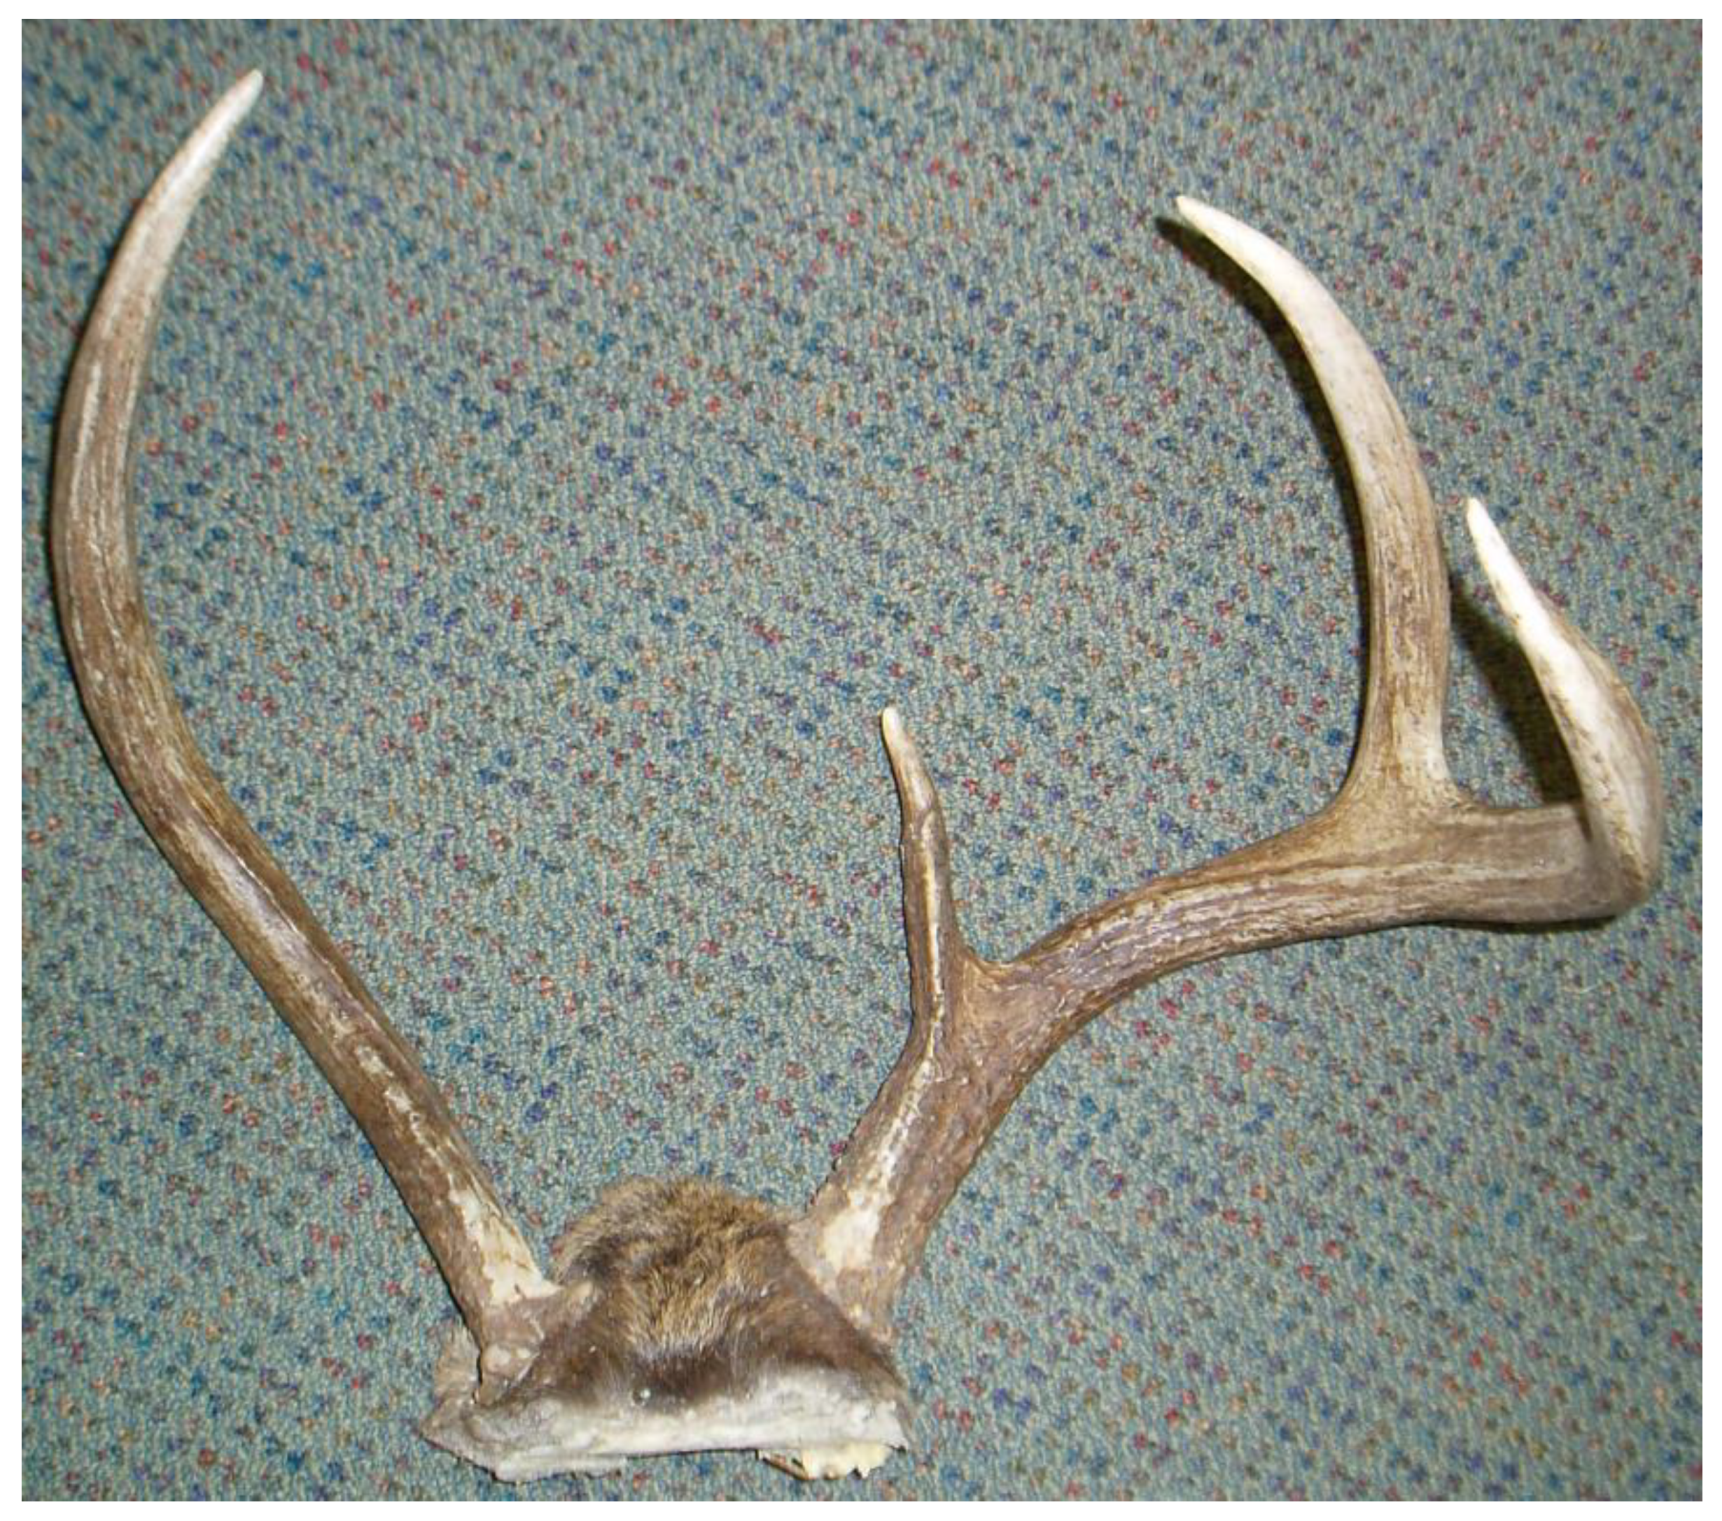 Antler Development in White-tailed Deer: Implications for